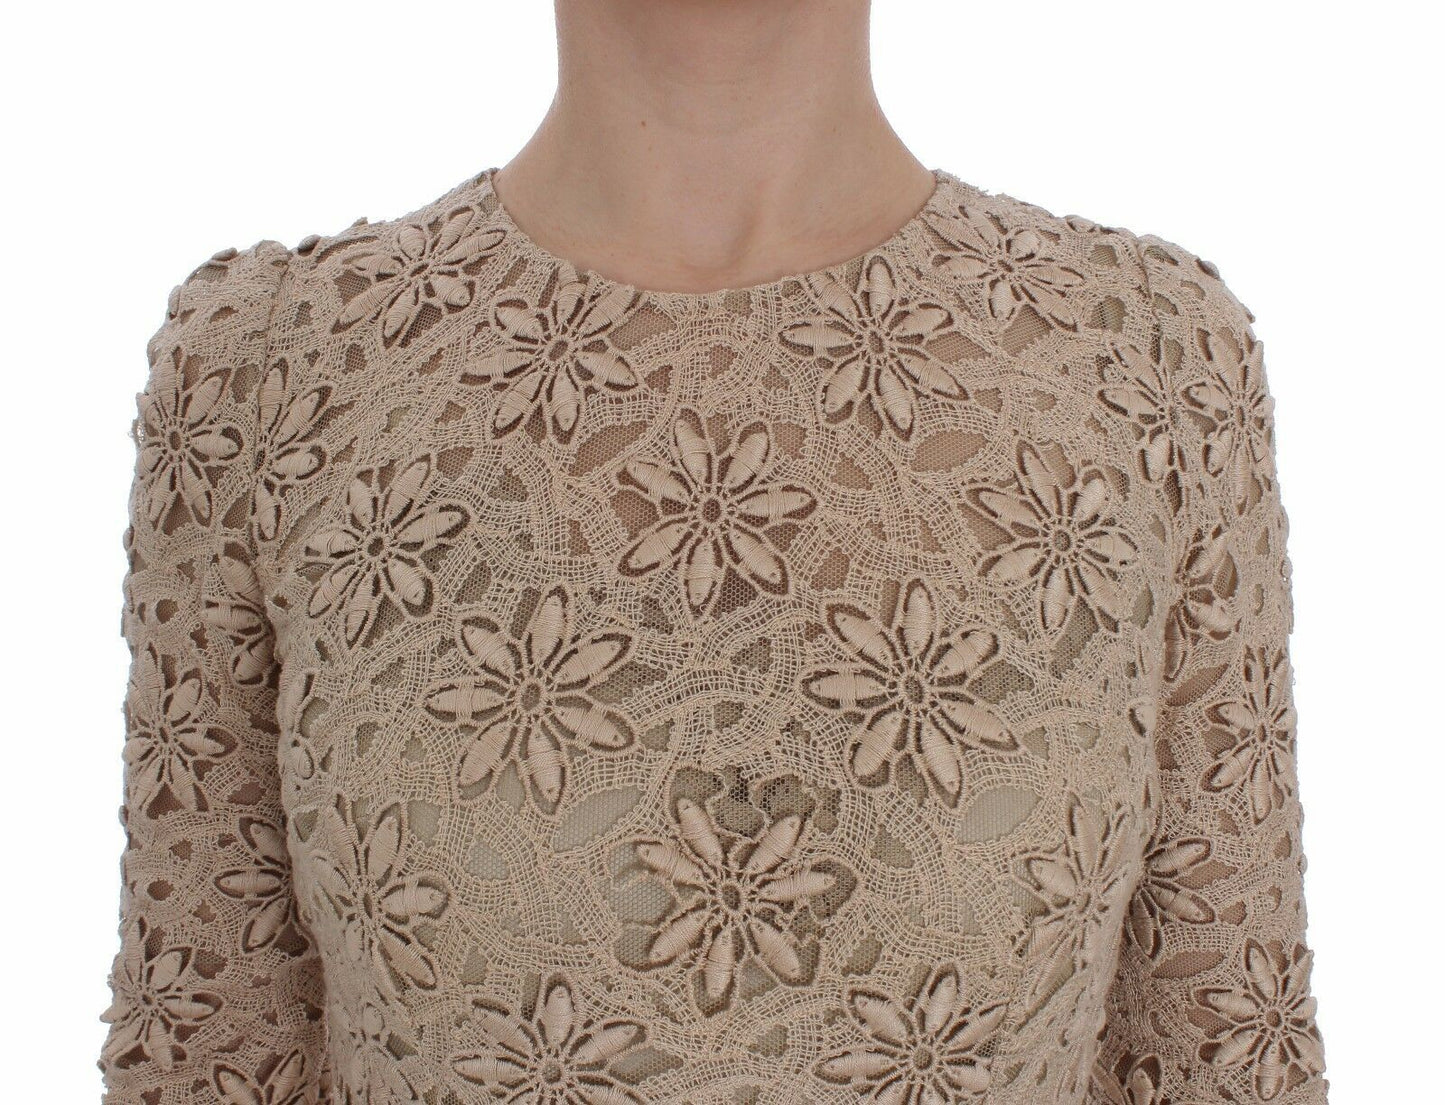 Beige Floral Lace Long Sleeve Maxi Dress